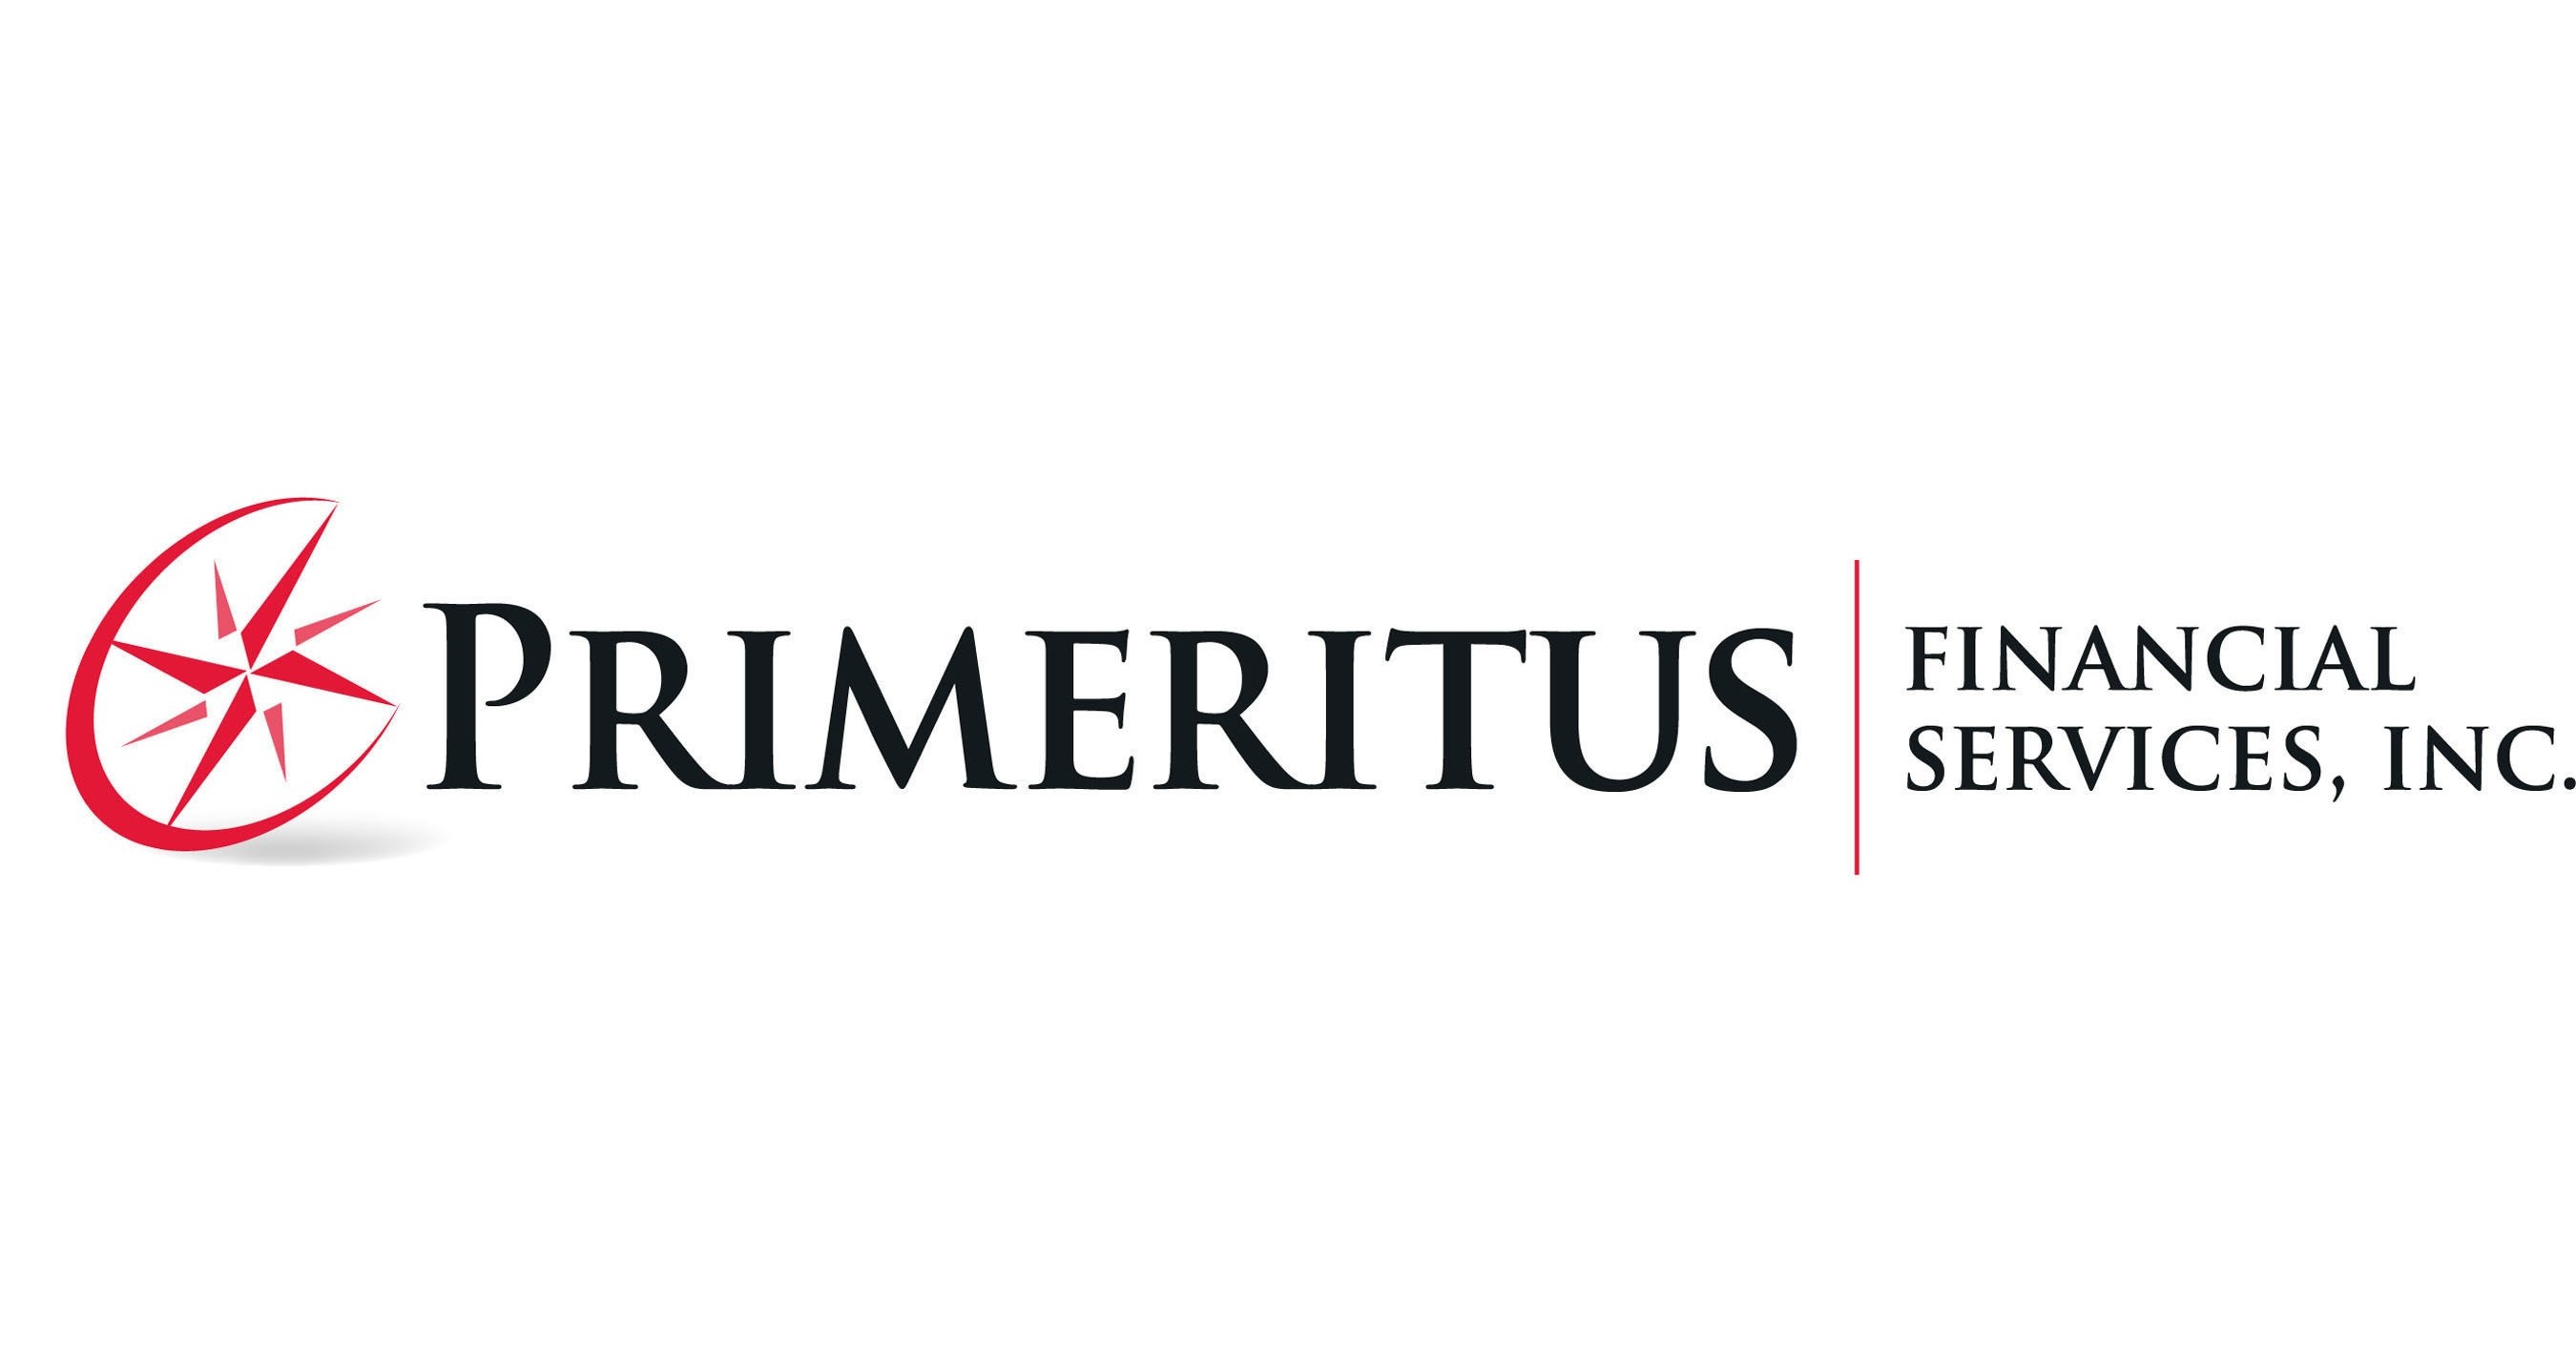 Primeritus Financial Services Acquires Global Investigative Services